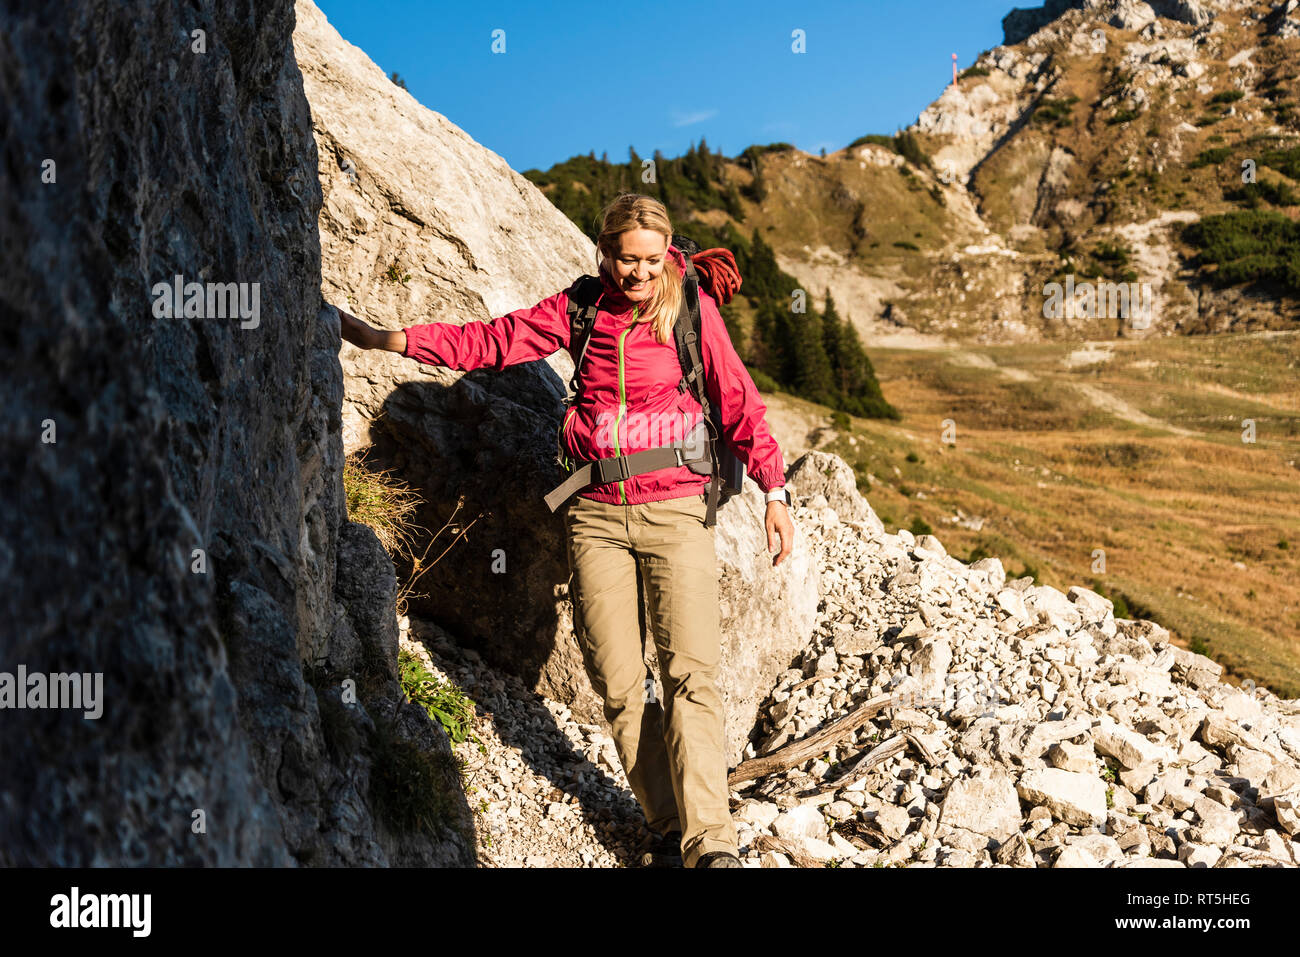 Woman mountain hiking in rocky terrain Stock Photo